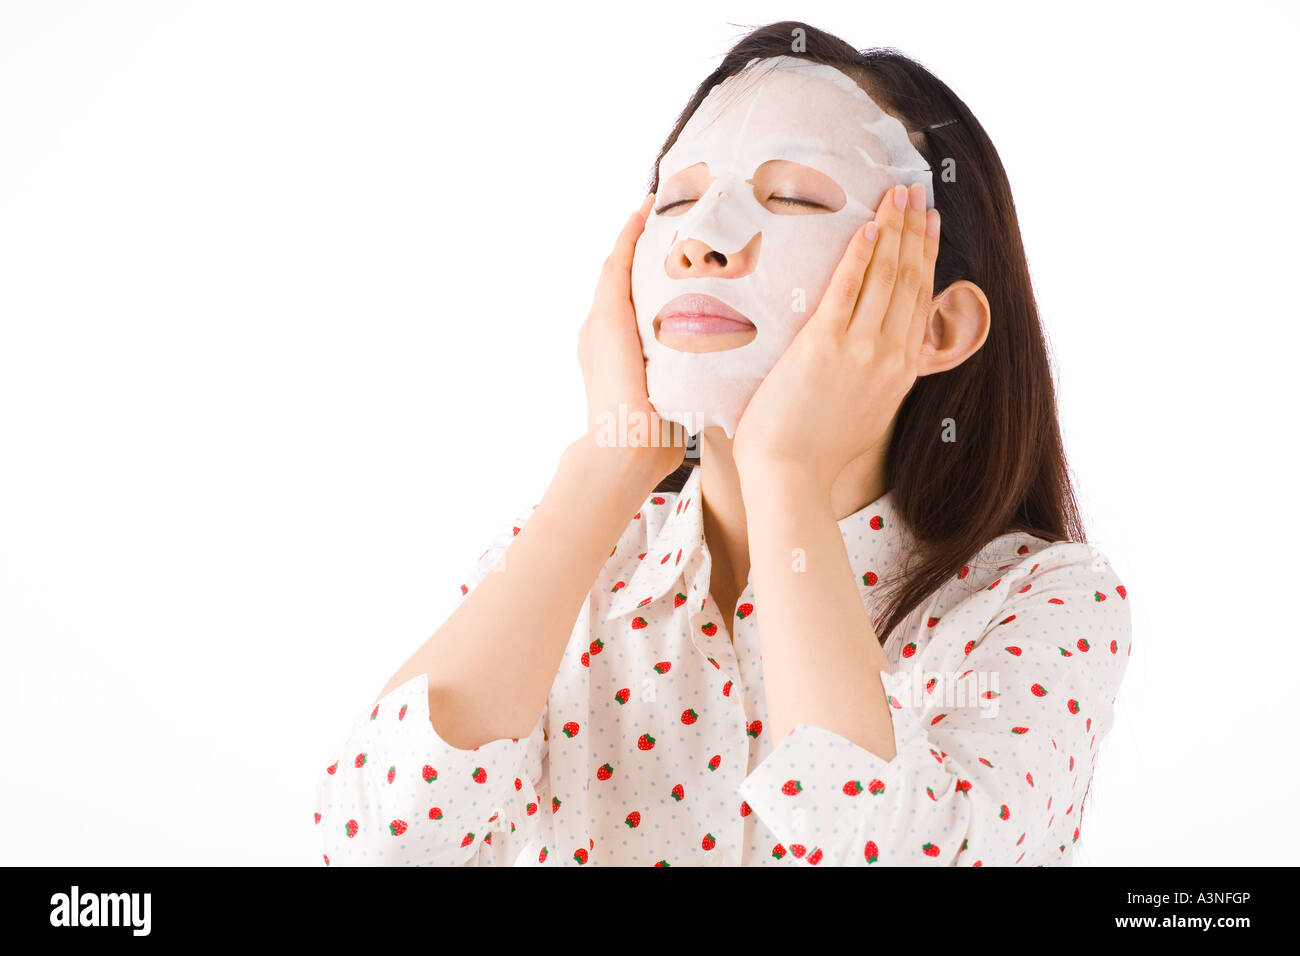 A woman applying facial mask Stock Photo